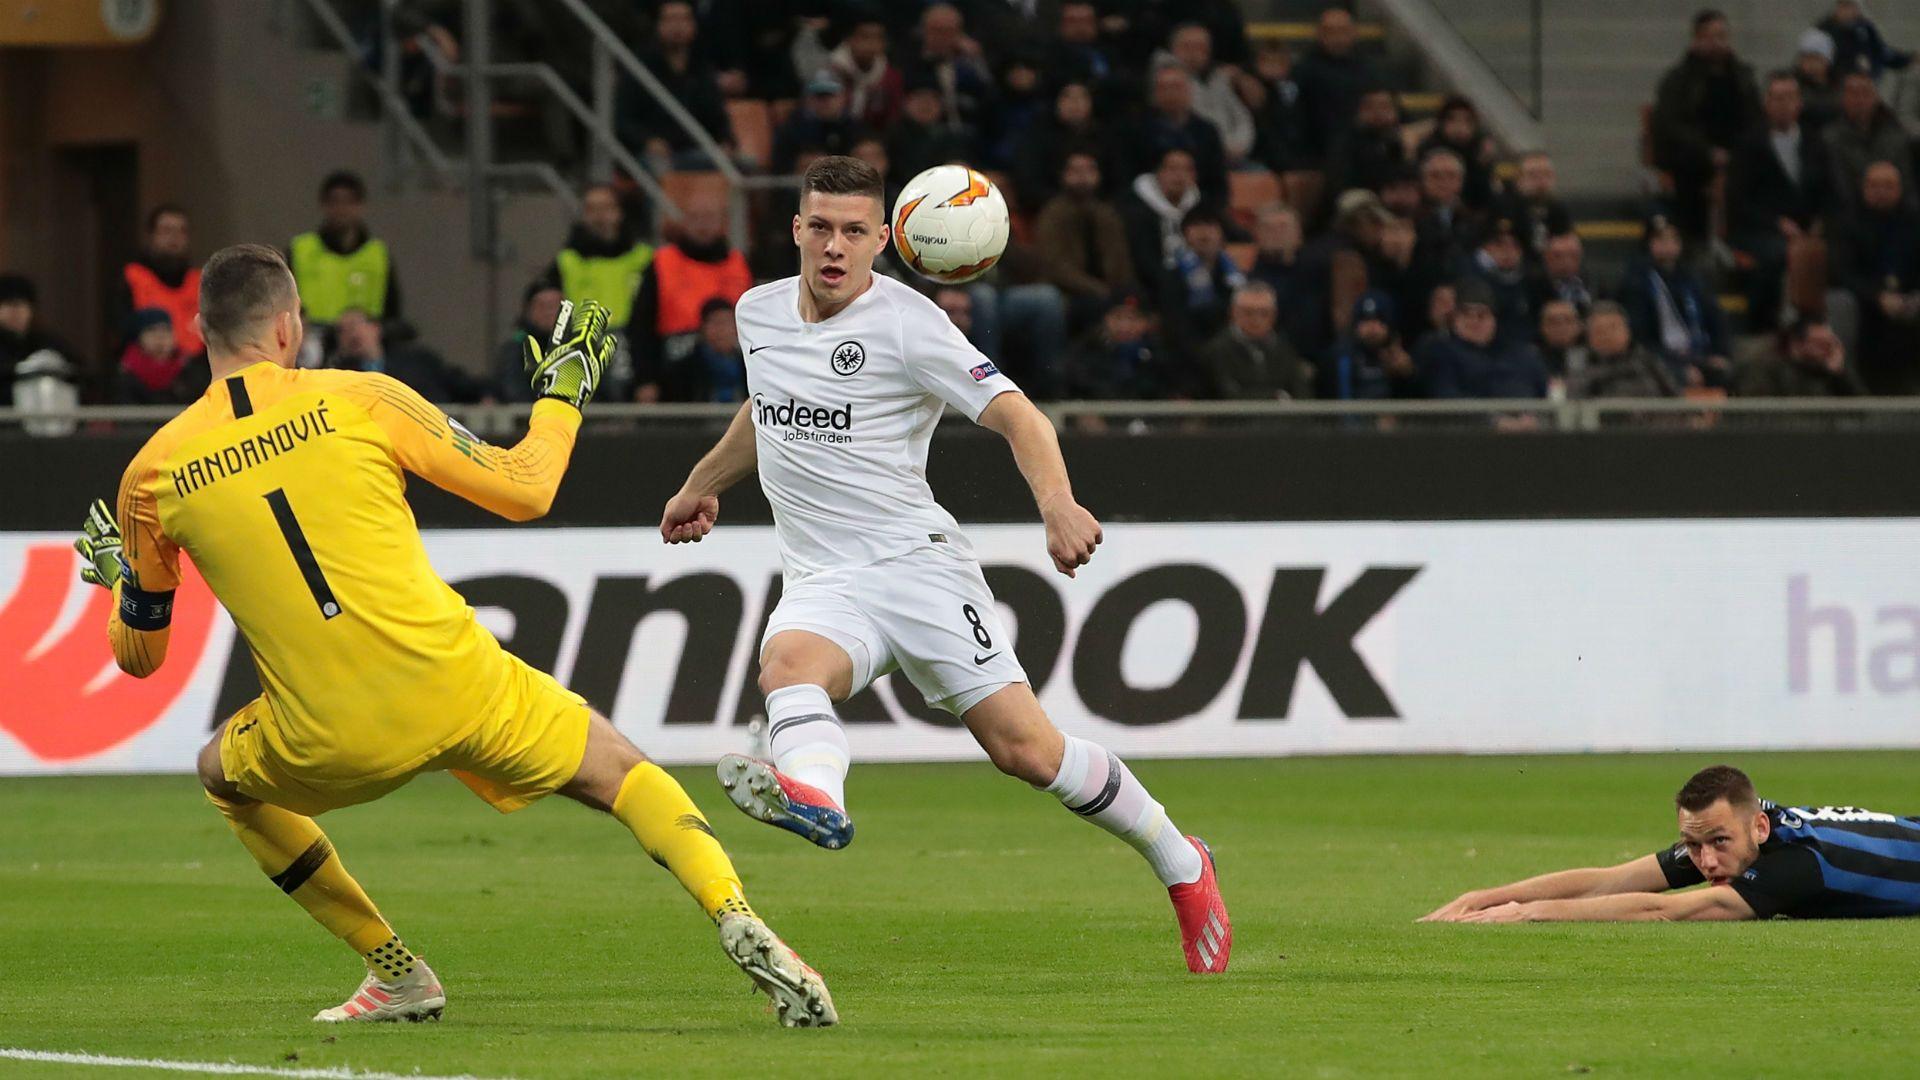 Luka Jović chips the ball over Samir Handanović to score the only